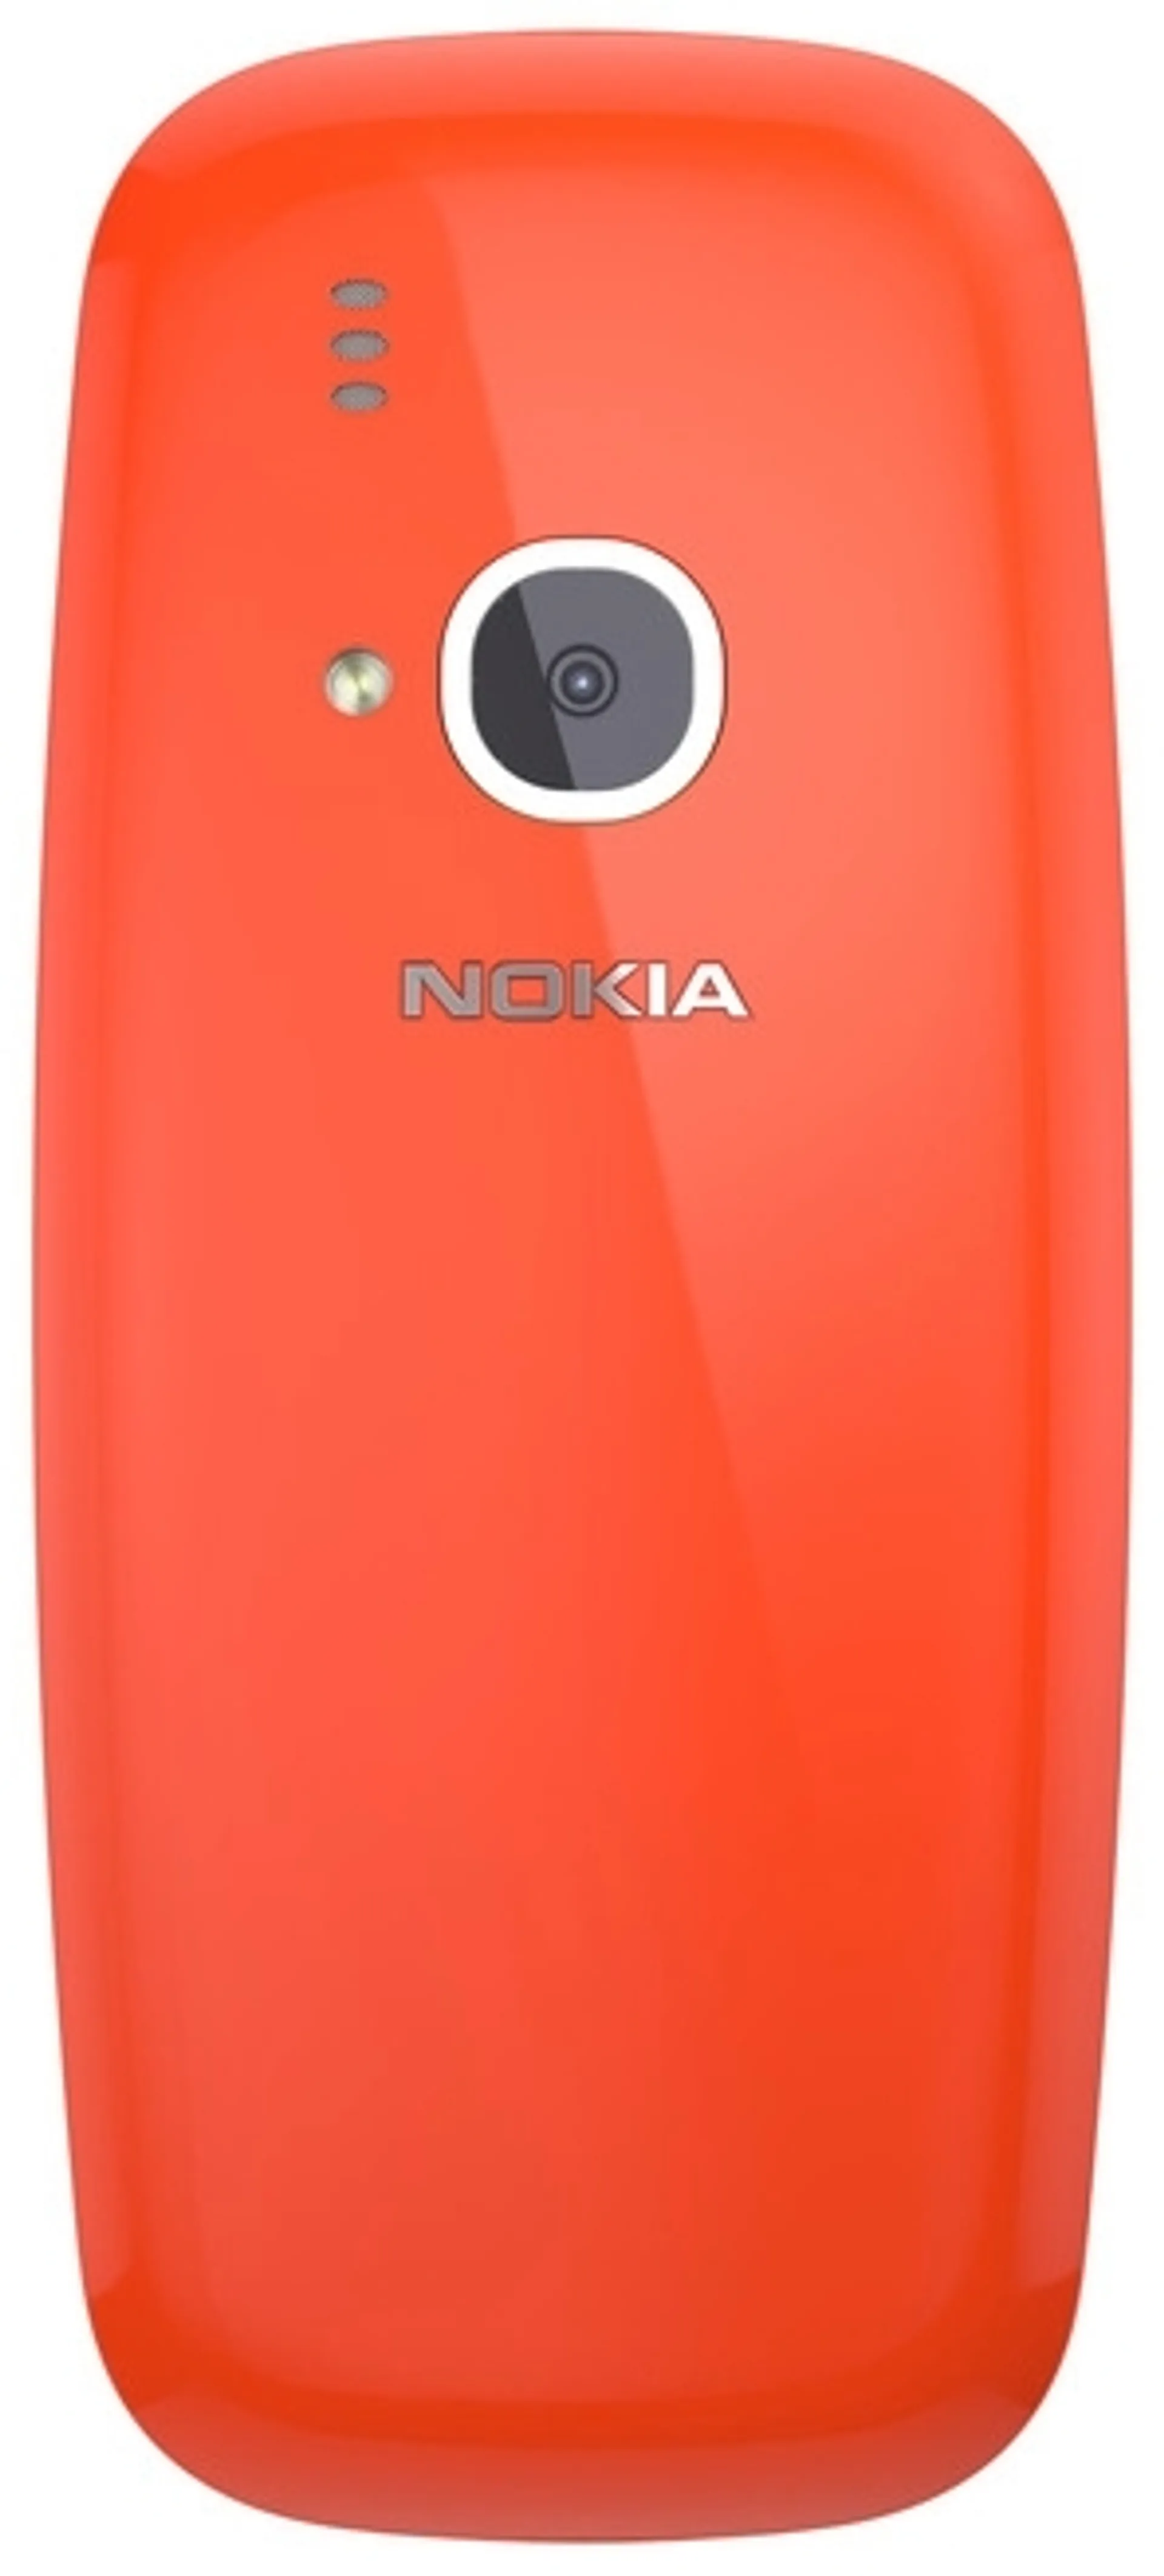 Nokia 3310 dual-sim 2G matkapuhelin punainen - 4